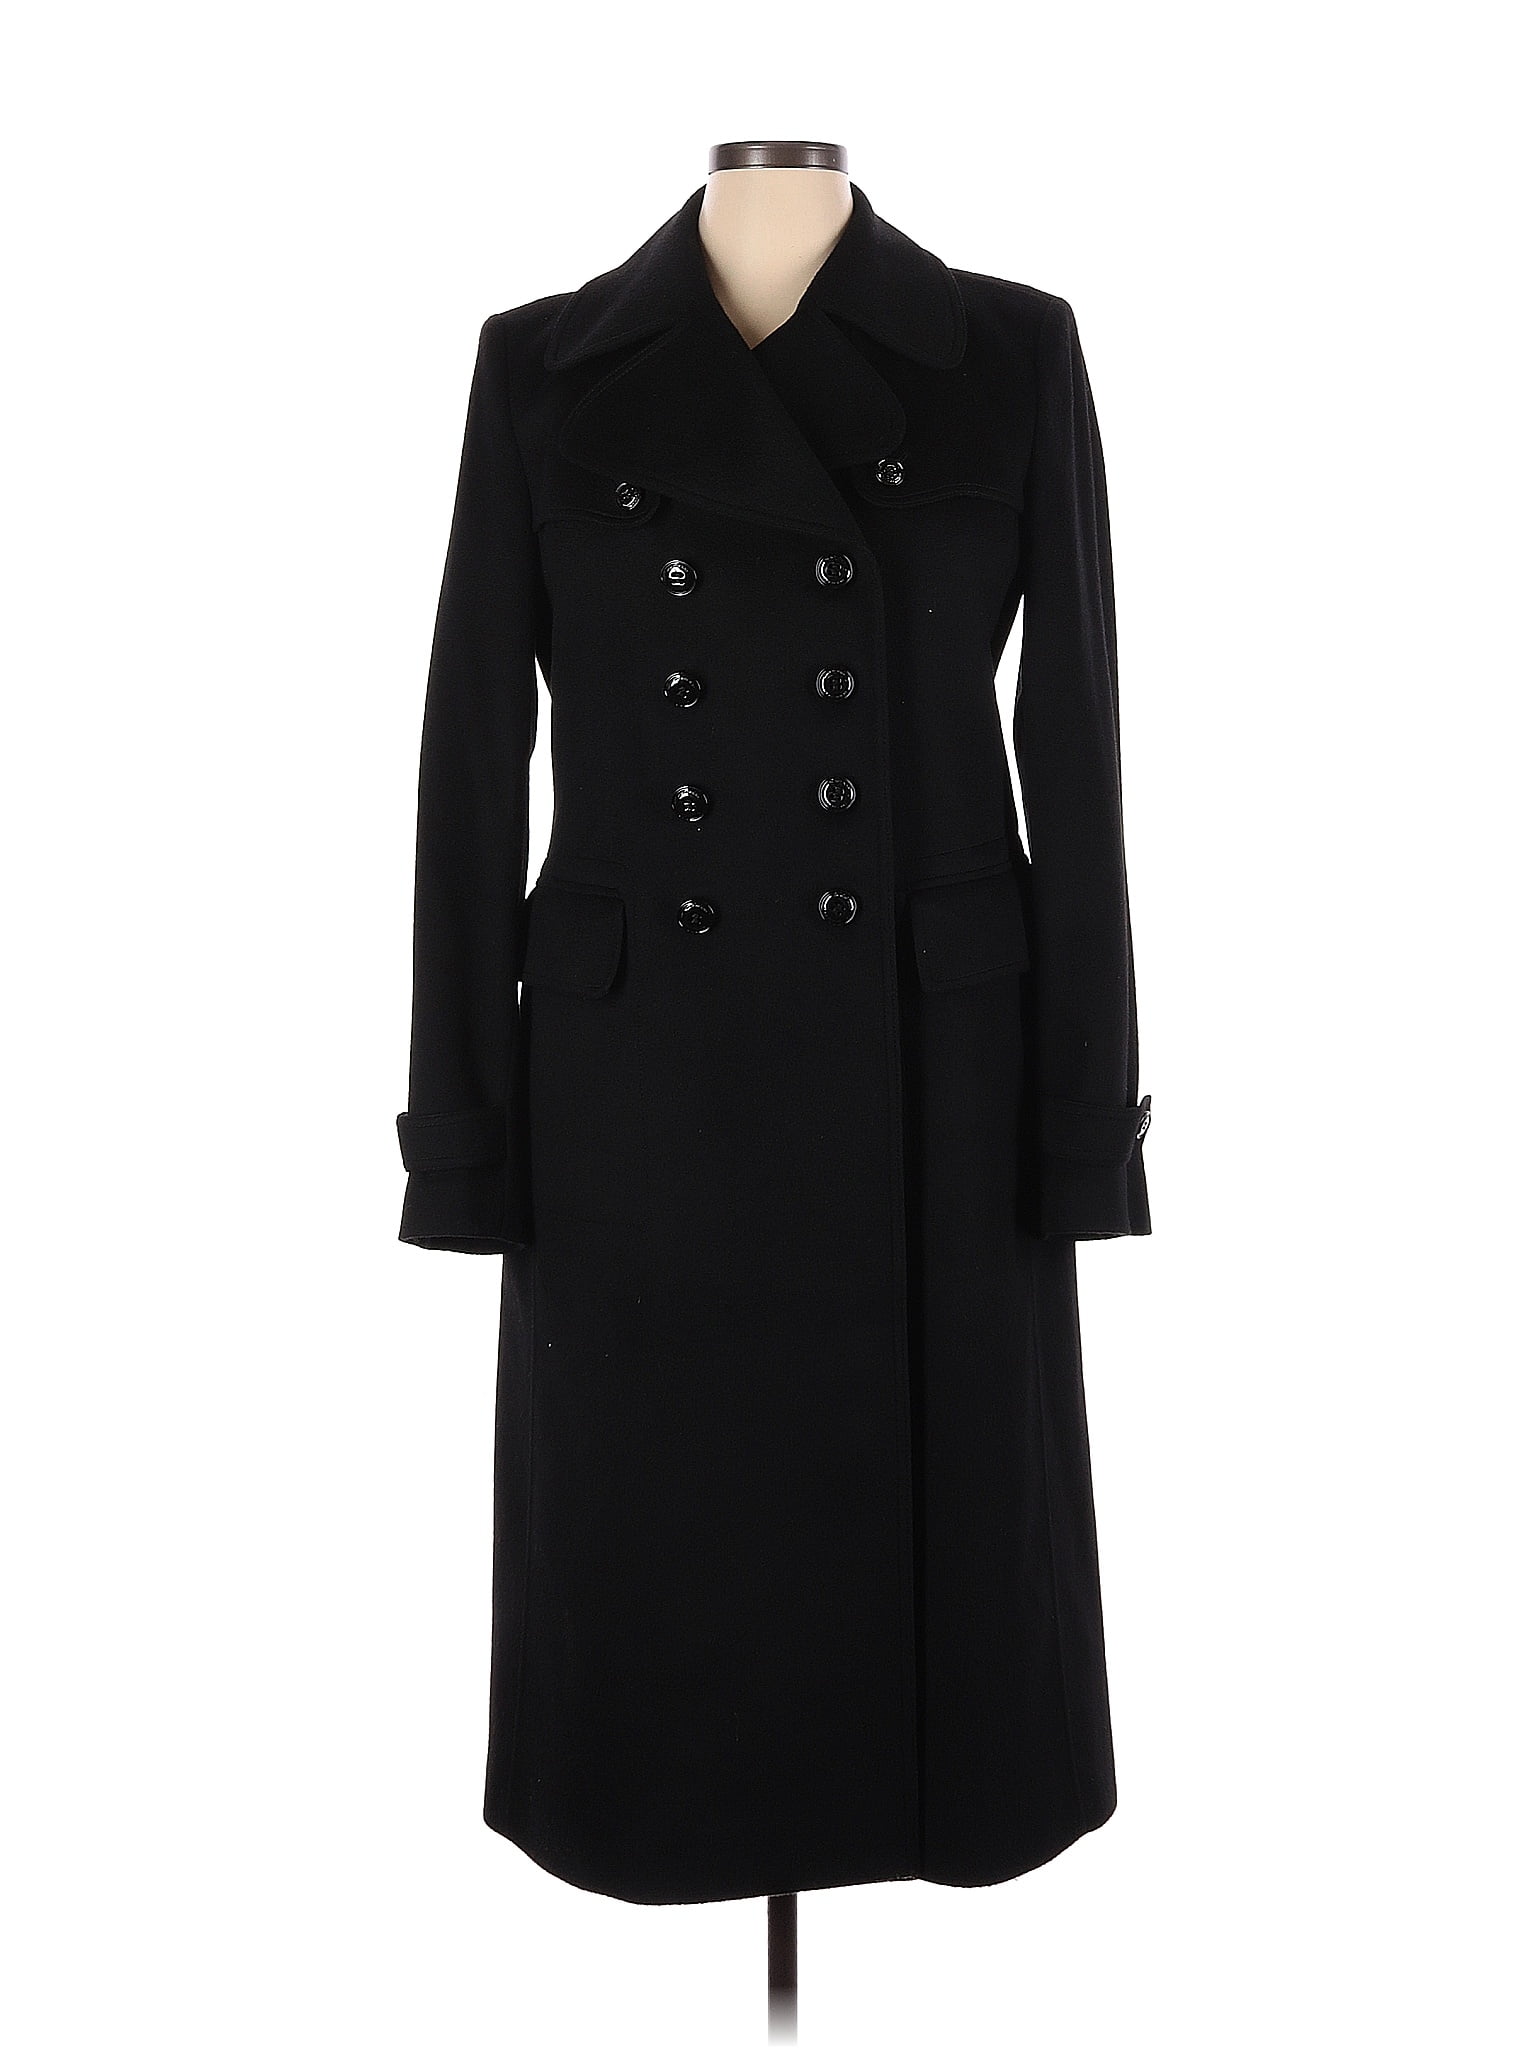 Burberry 100% Cashmere Solid Black Coat Size 14 - 81% off | thredUP